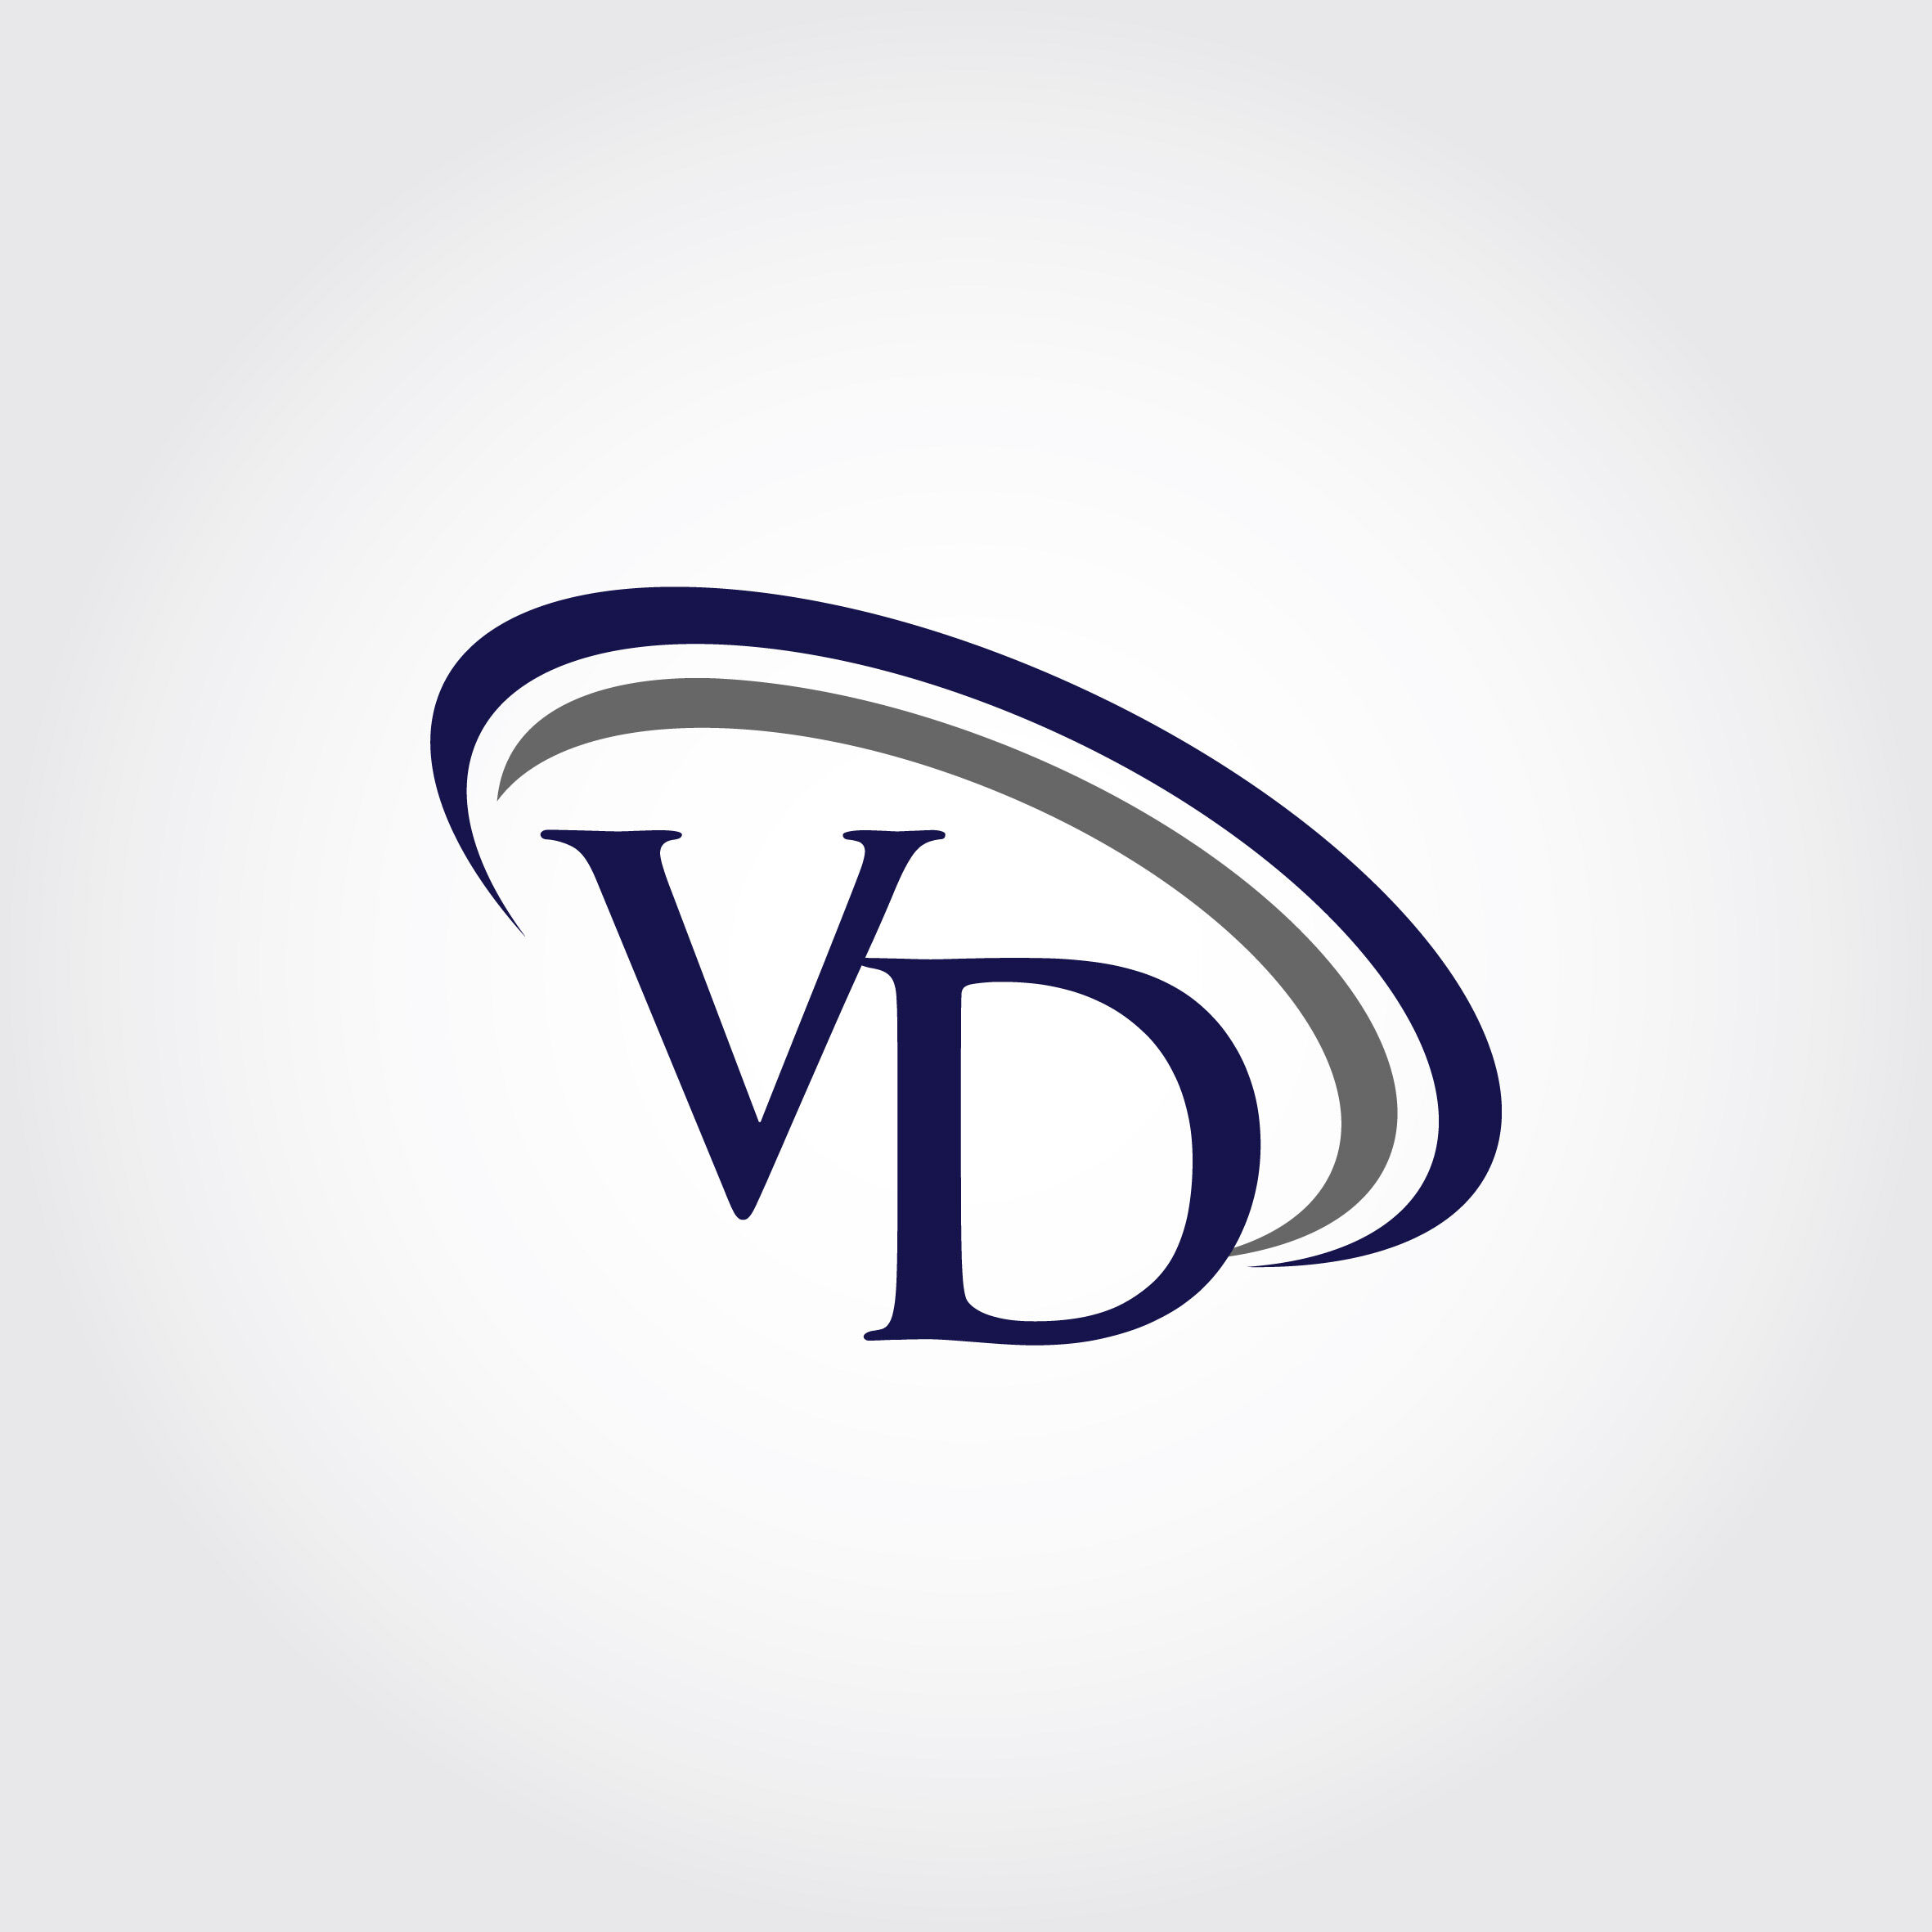 Monogram Vd Logo Design By Vectorseller Thehungryjpeg Com